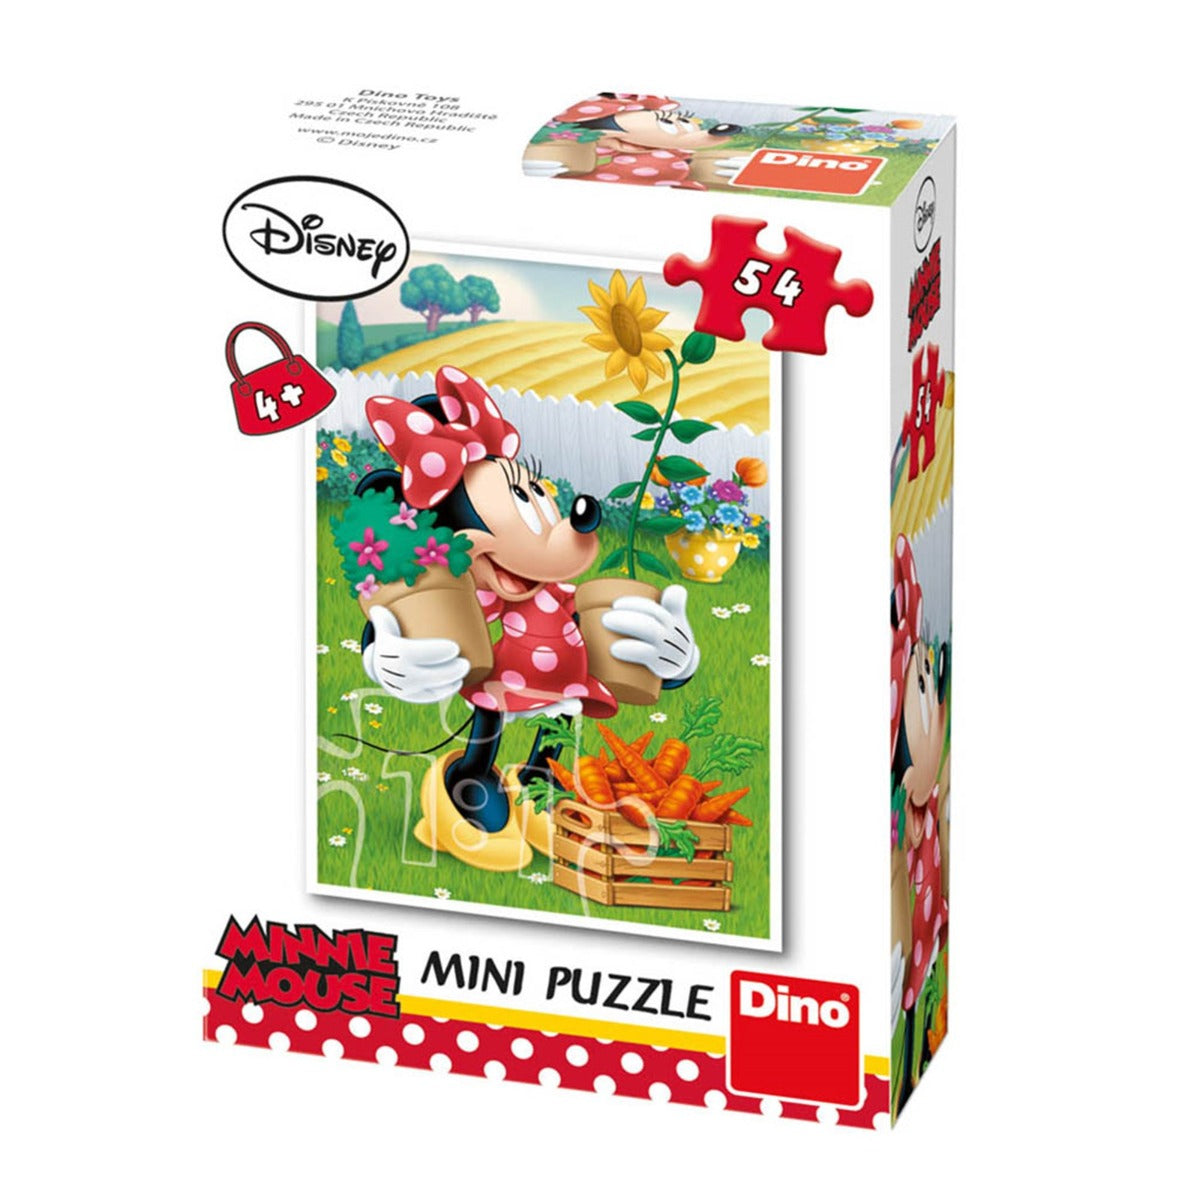 Puslespil - Minipuslespil: Disney - Minnie Mouse, 54 brikker